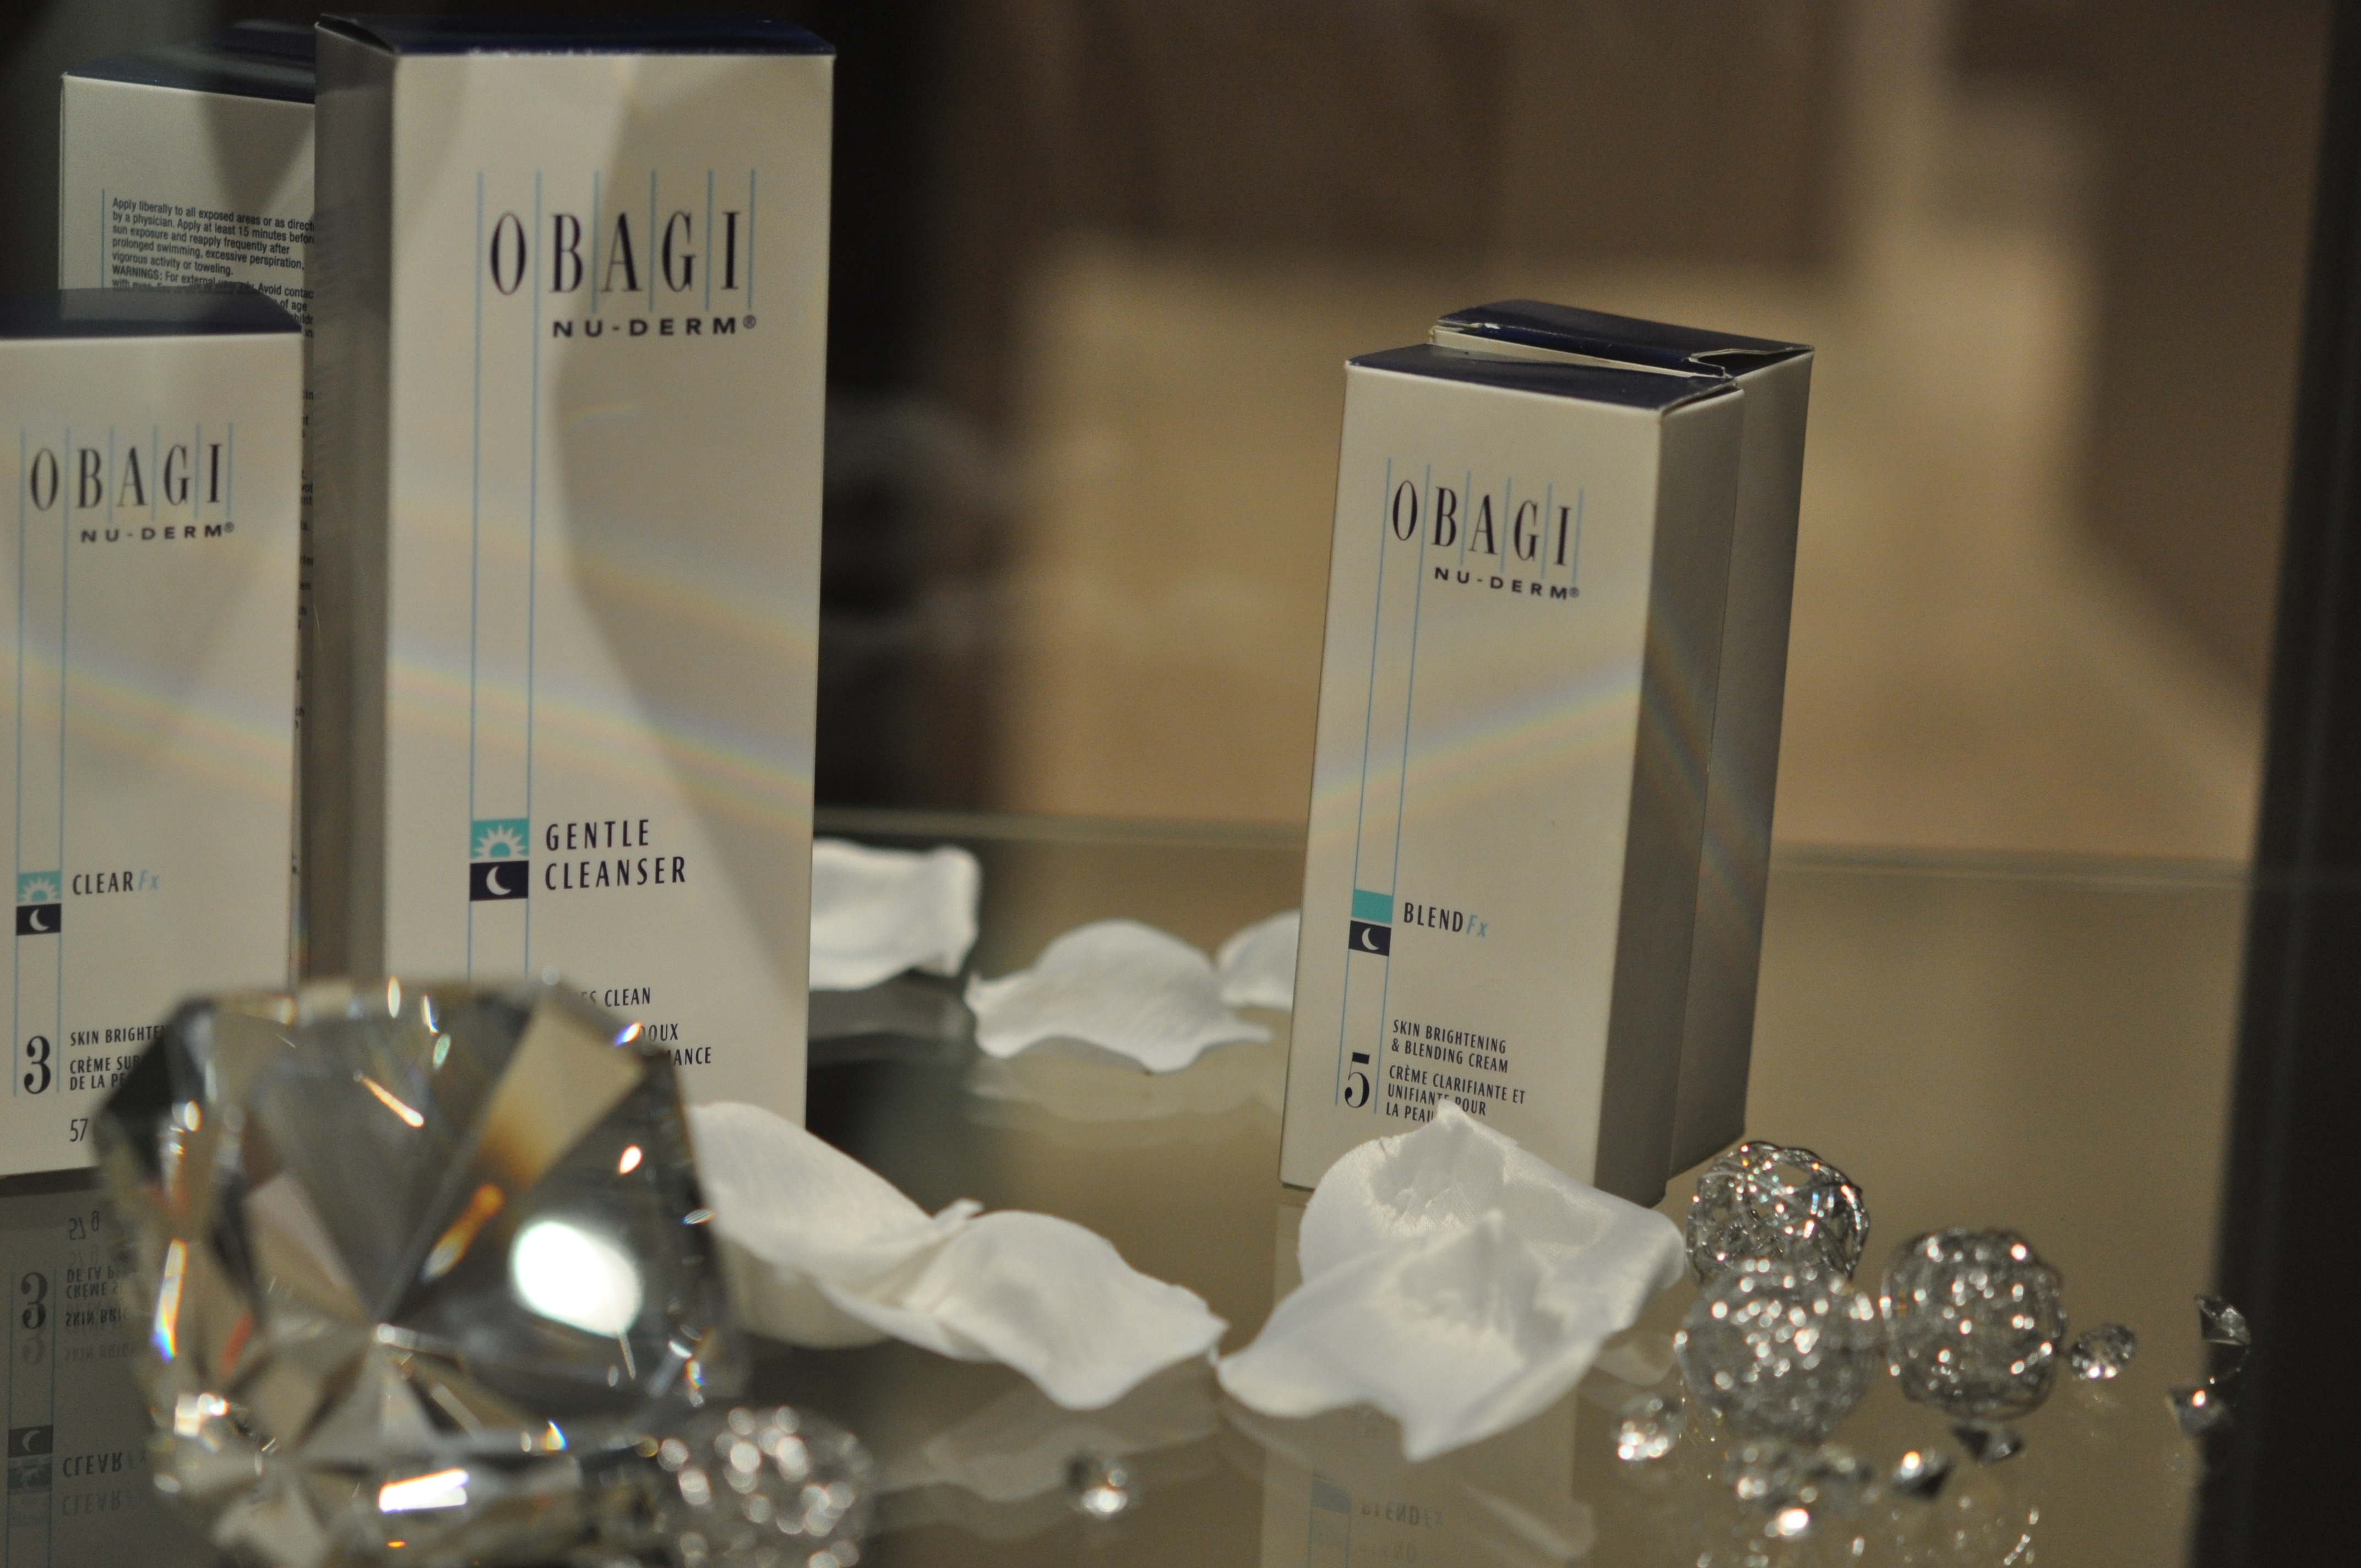 Obagi Skin Care Products at DermaSpa Ajax Pickering in Durham Region